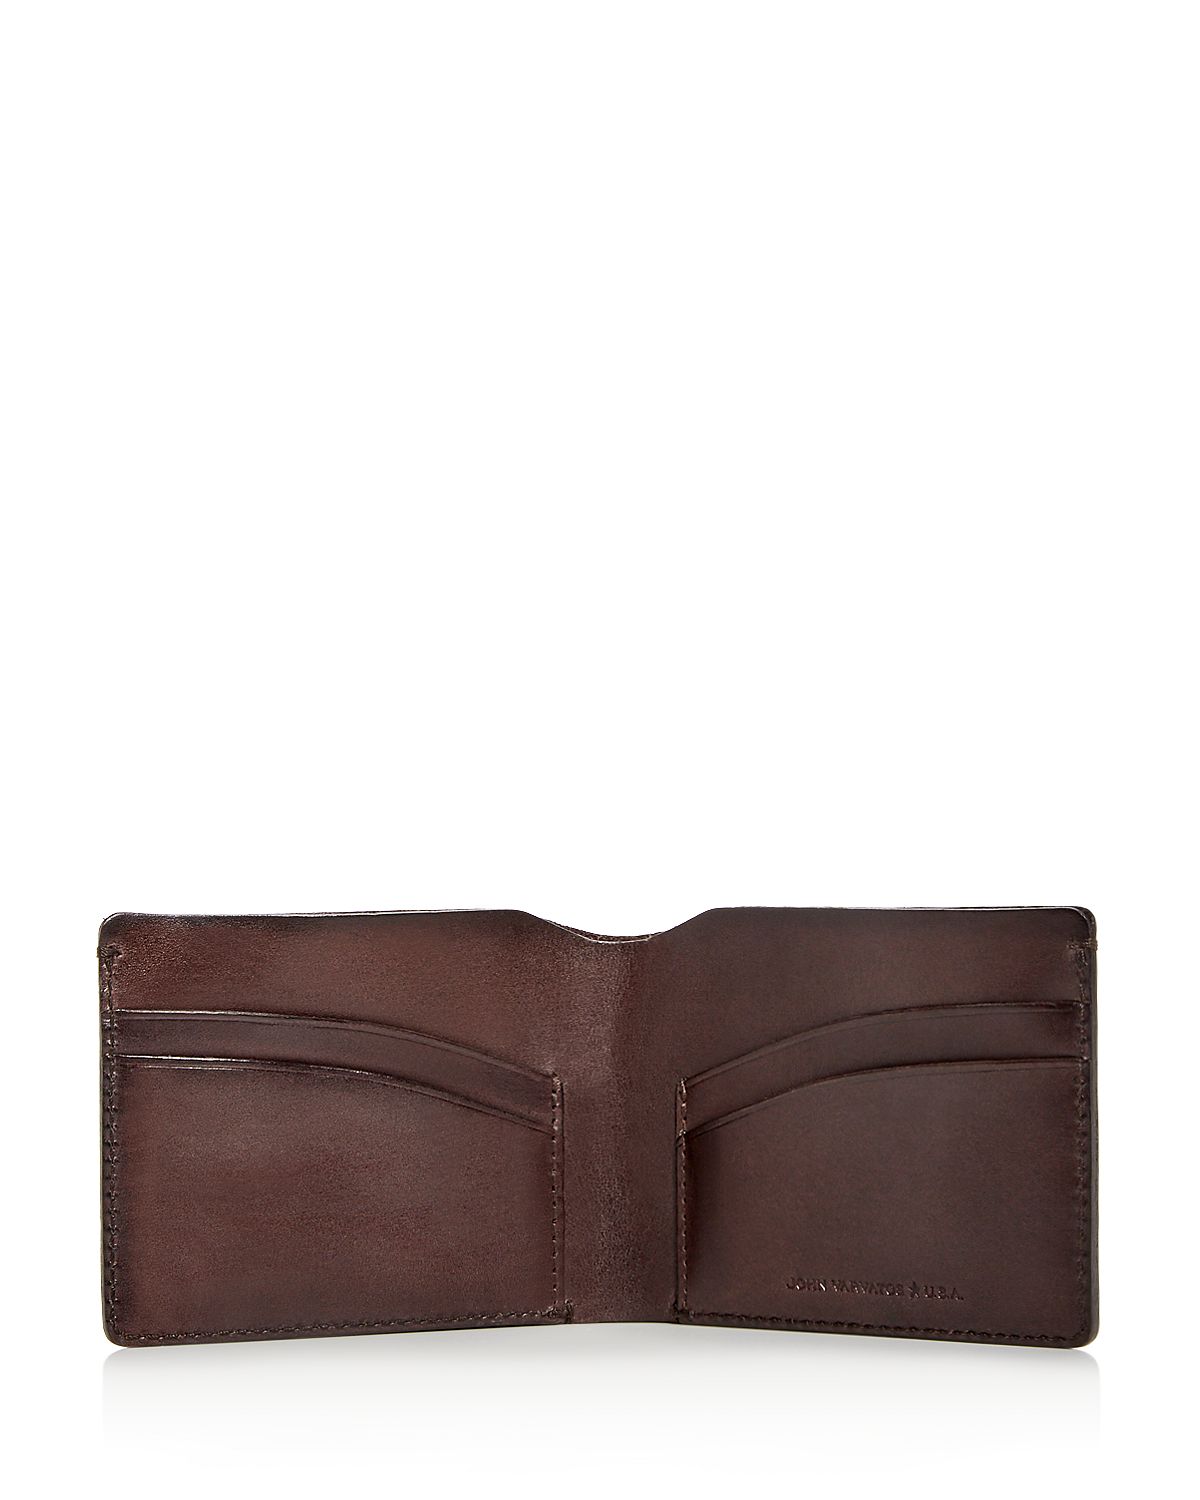 John Varvatos Star Usa Bushwick Leather Bi-fold Wallet Brown